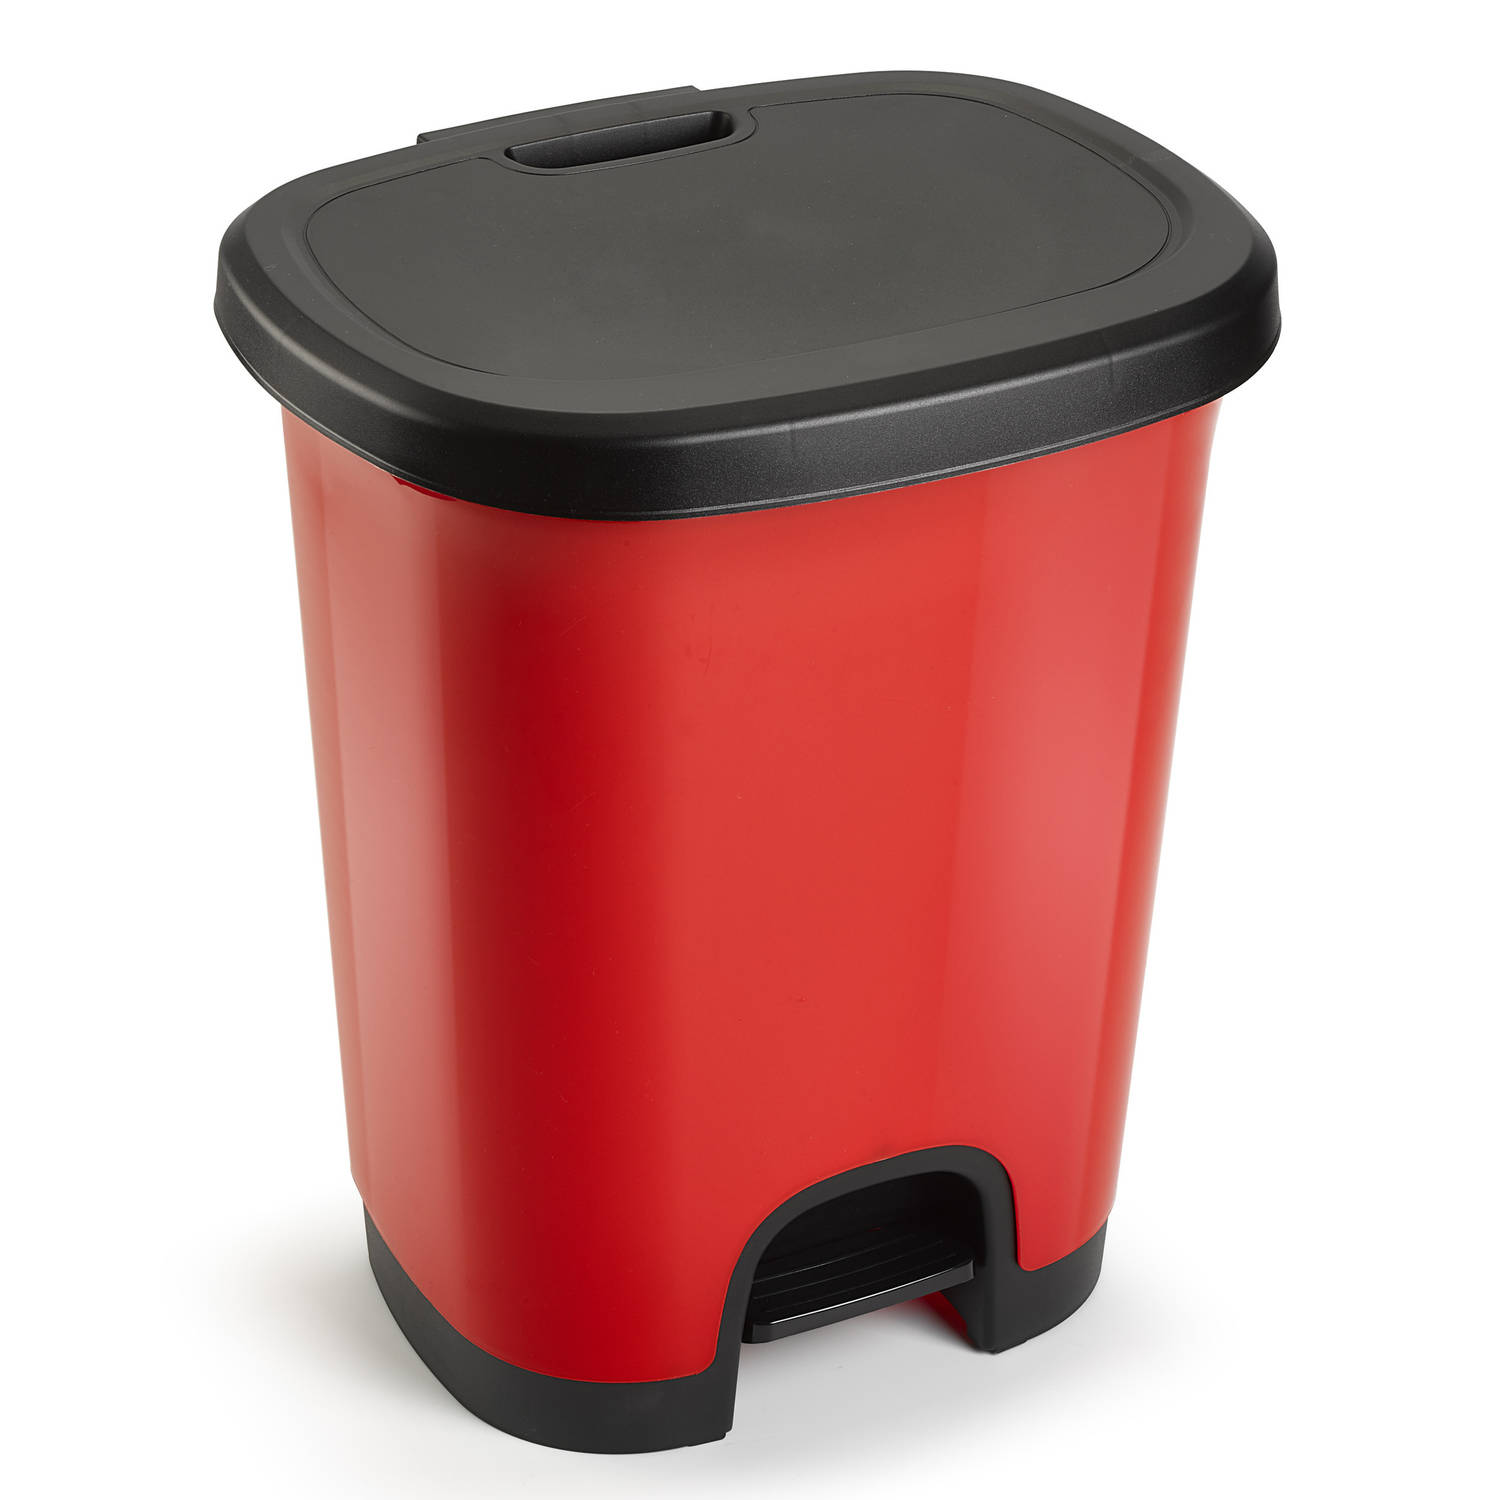 Afvalemmer/vuilnisemmer/pedaalemmer 18 liter in het rood/zwart met deksel en pedaal - Pedaalemmers